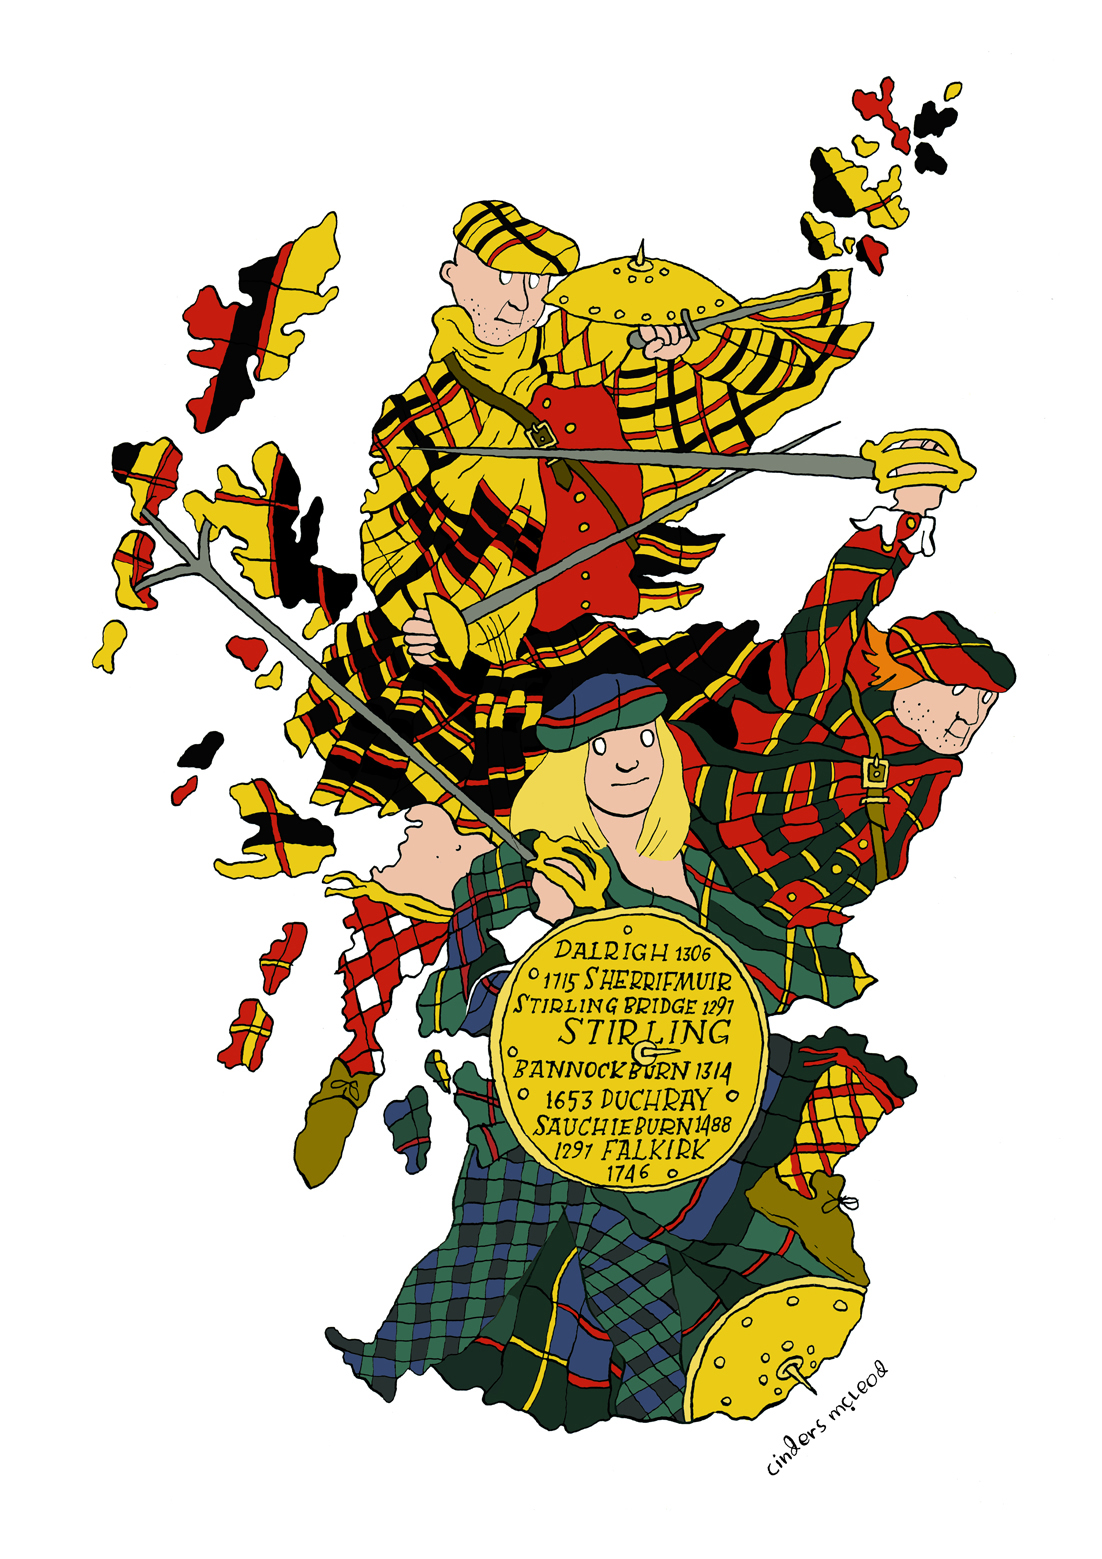   Map of Scotland  Leiper Gallery, Glasgow 